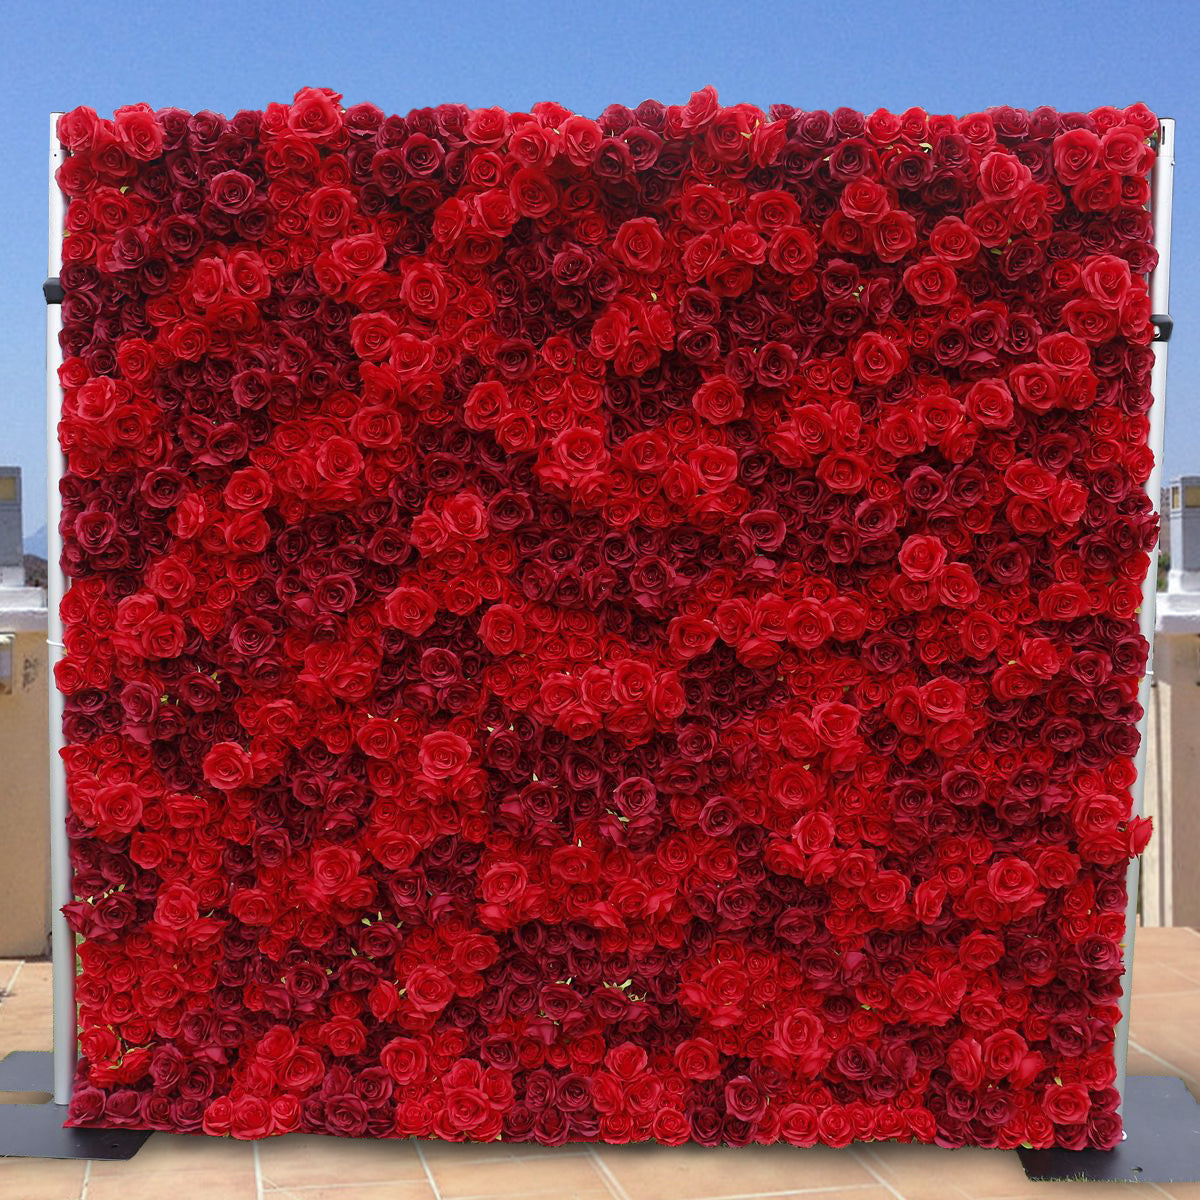 5D Artificial Flower Wall Arrangement Wedding Party Birthday Backdrop Decor HQ9031